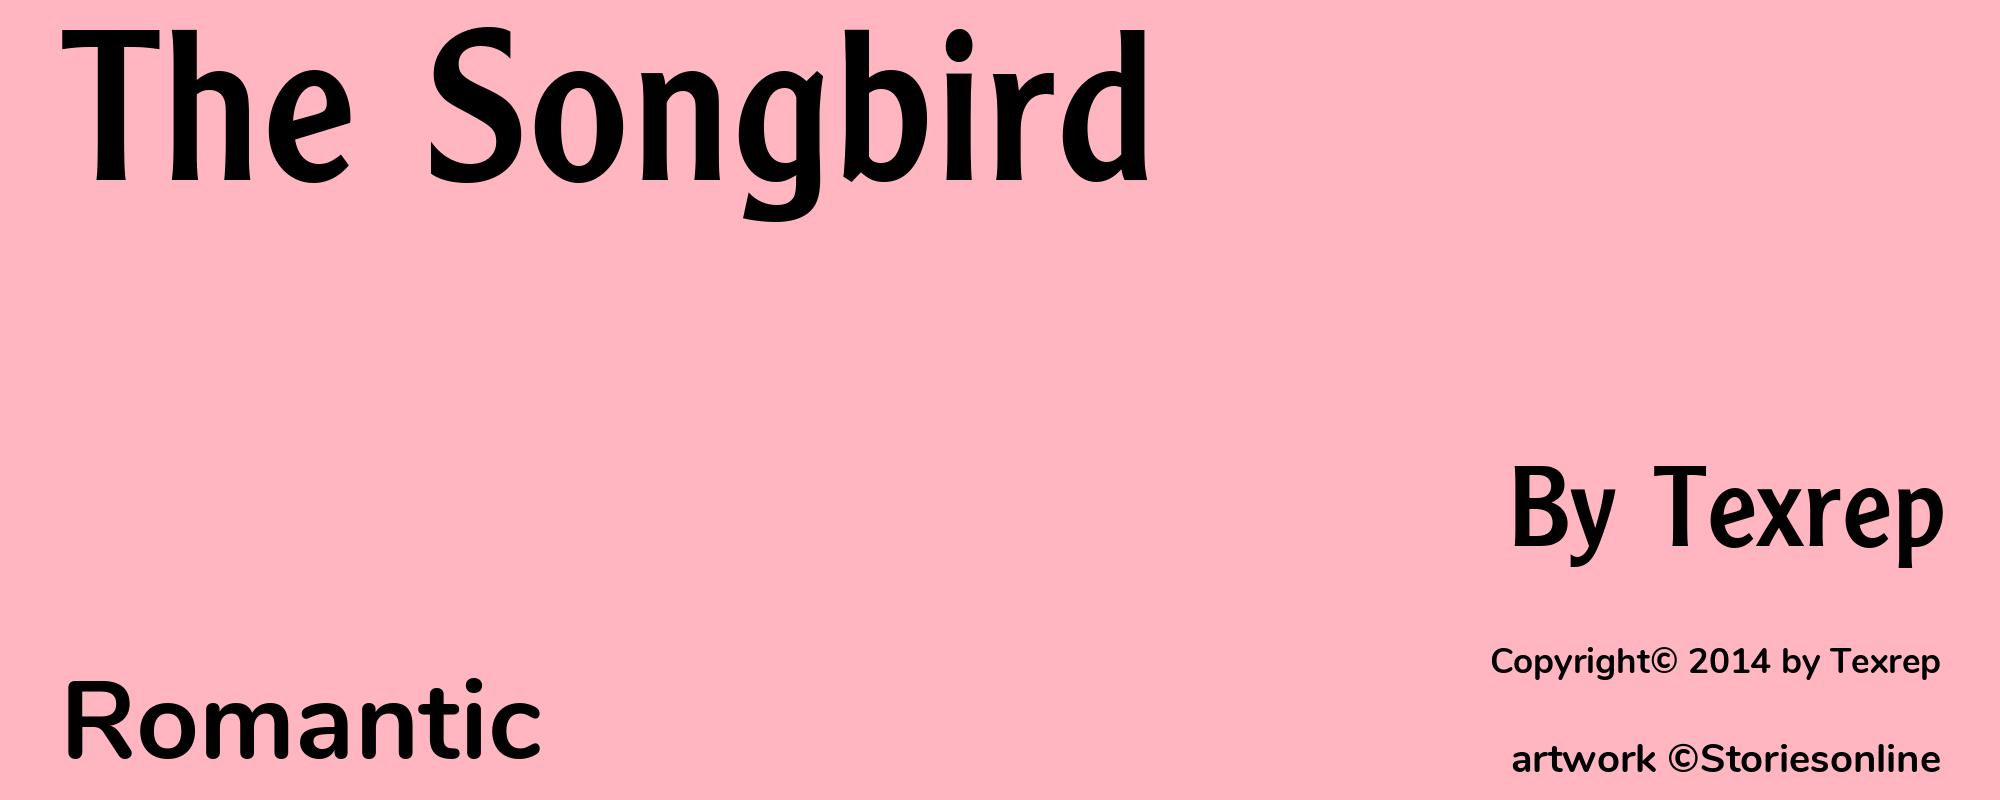 The Songbird - Cover